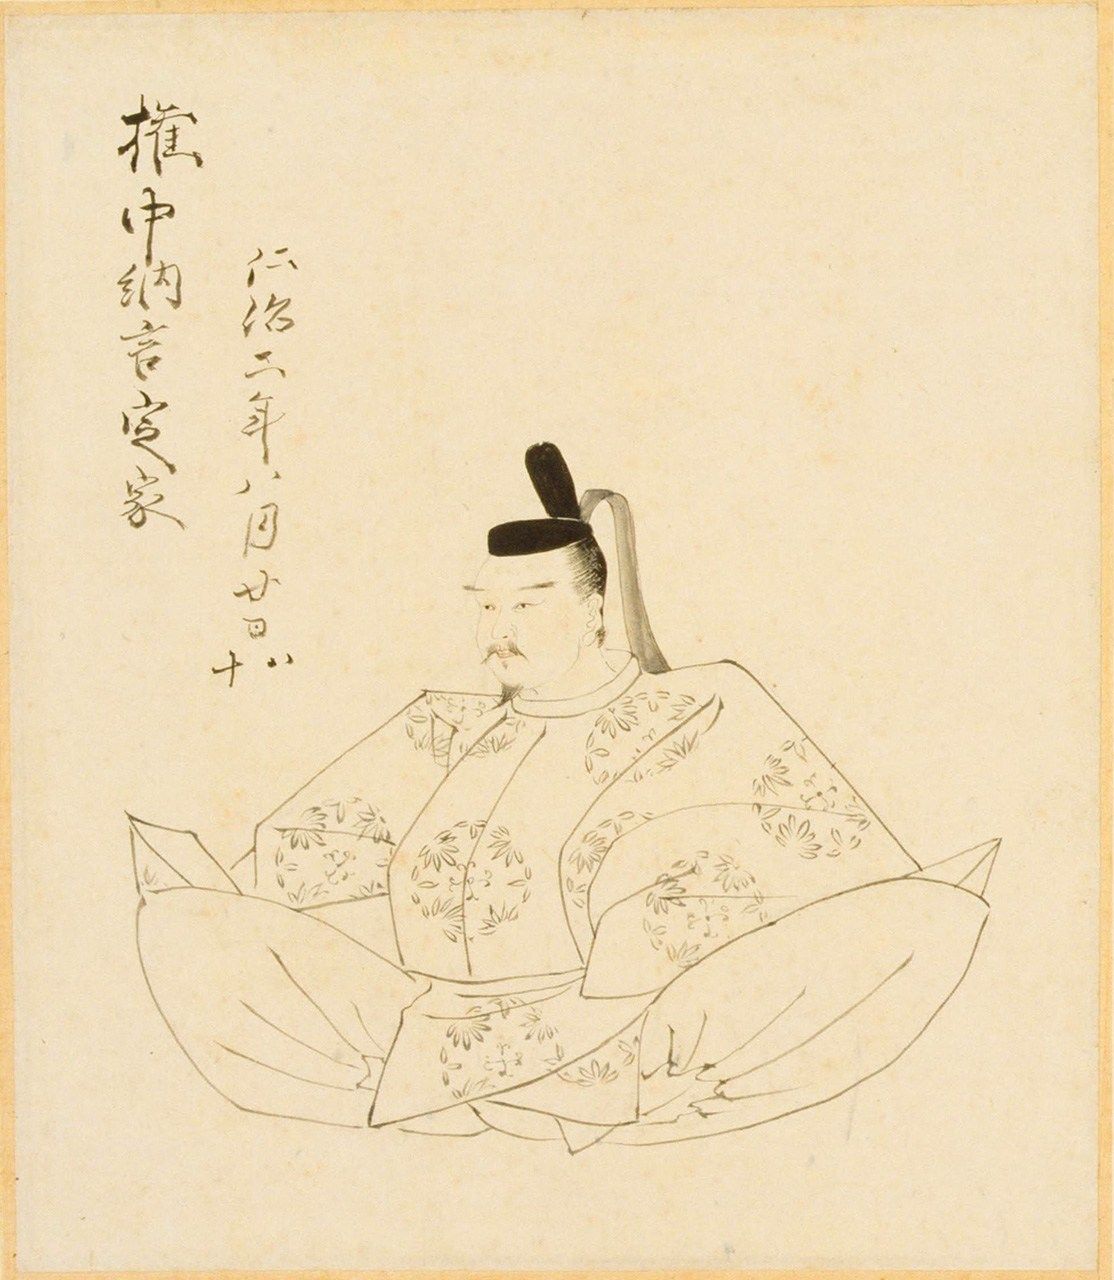 Portrait de Fujiwara no Teika (extrait du Recueil de portraits de Kurihara Nobumitsu, collections de la Bibliothèque nationale du Japon)